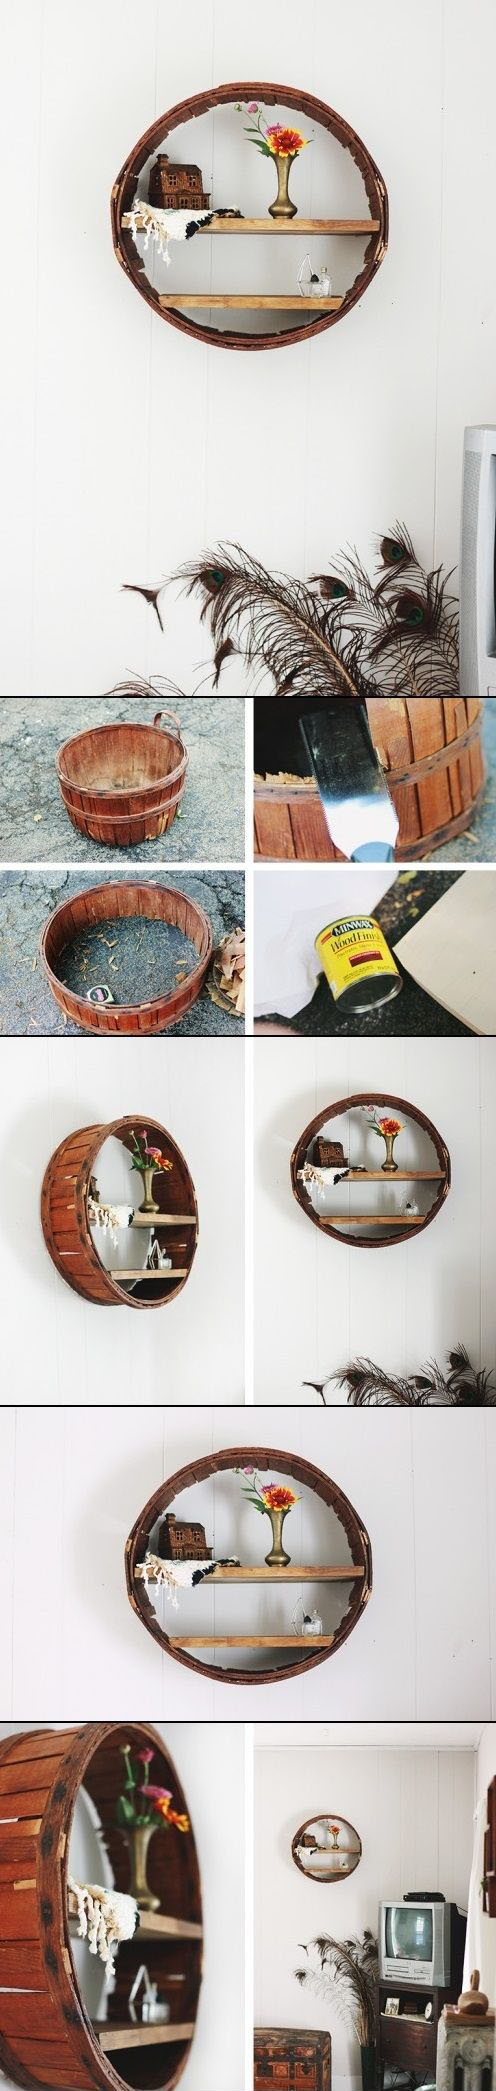 DIY Circle Shelf from barrel11